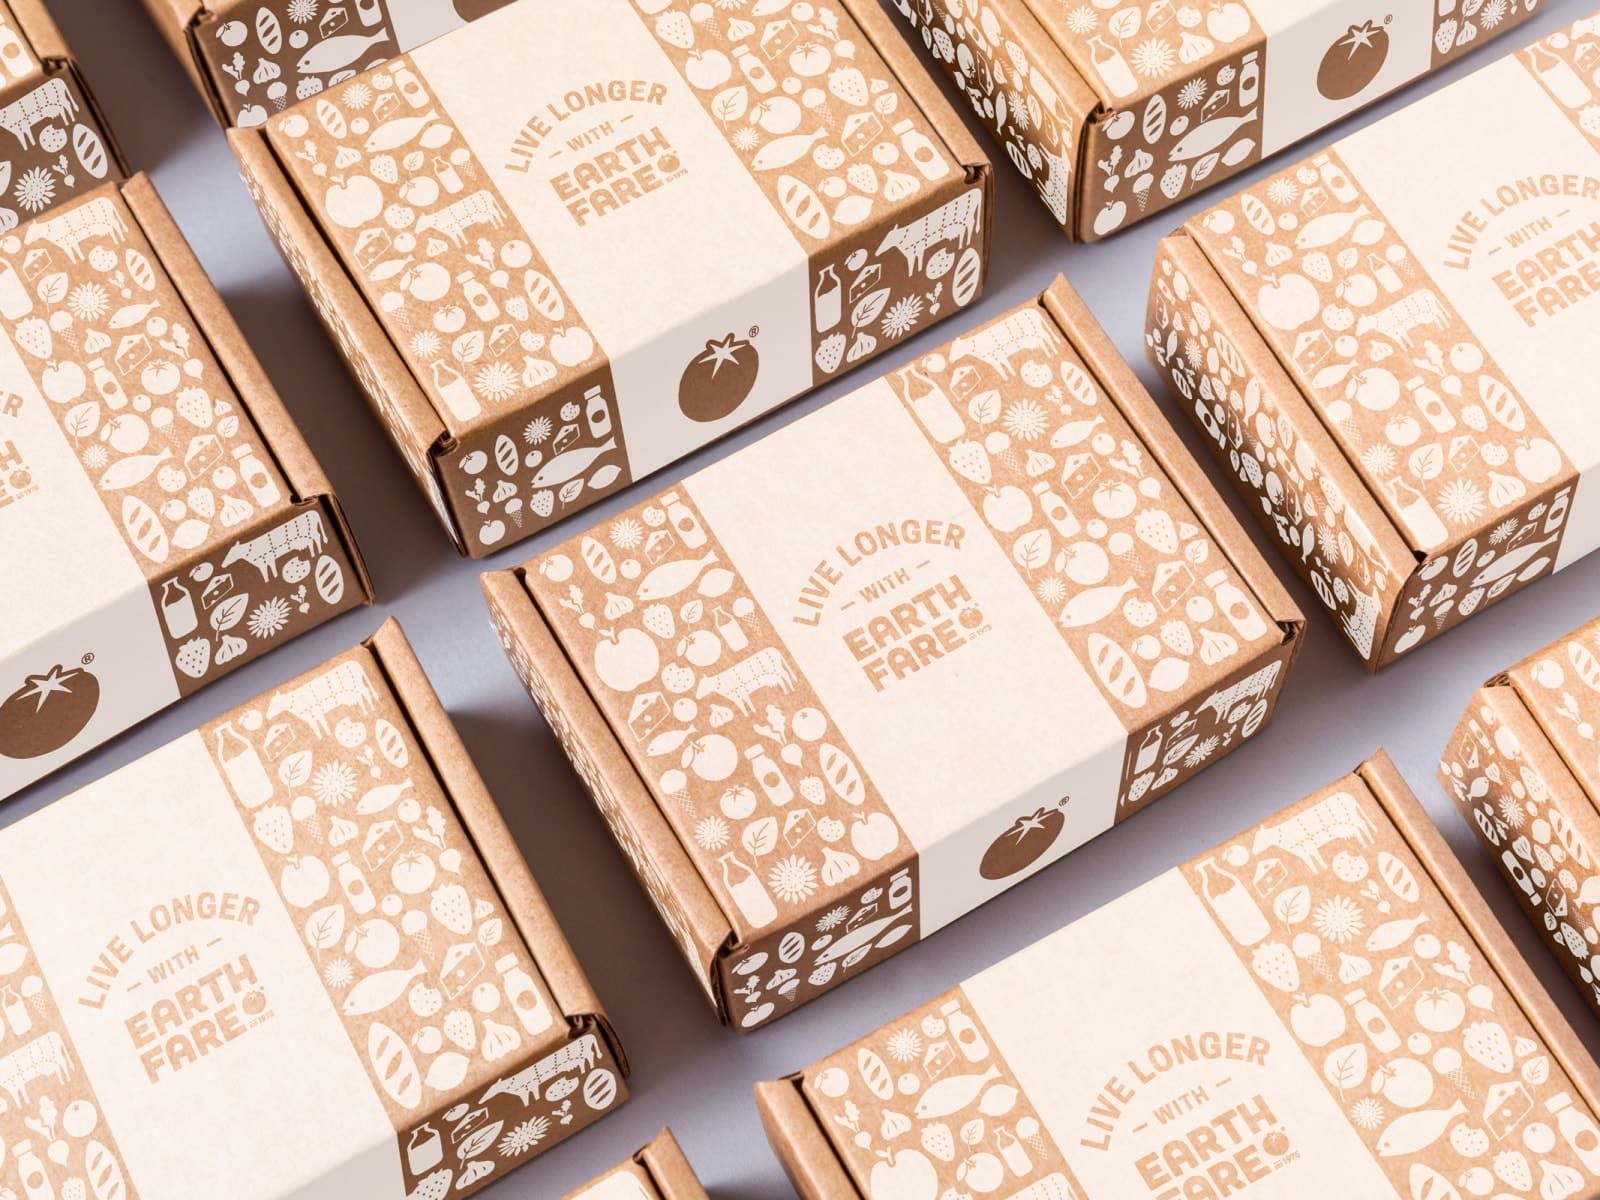 Fibreboard packaging for dangerous goods, custom-made boxes